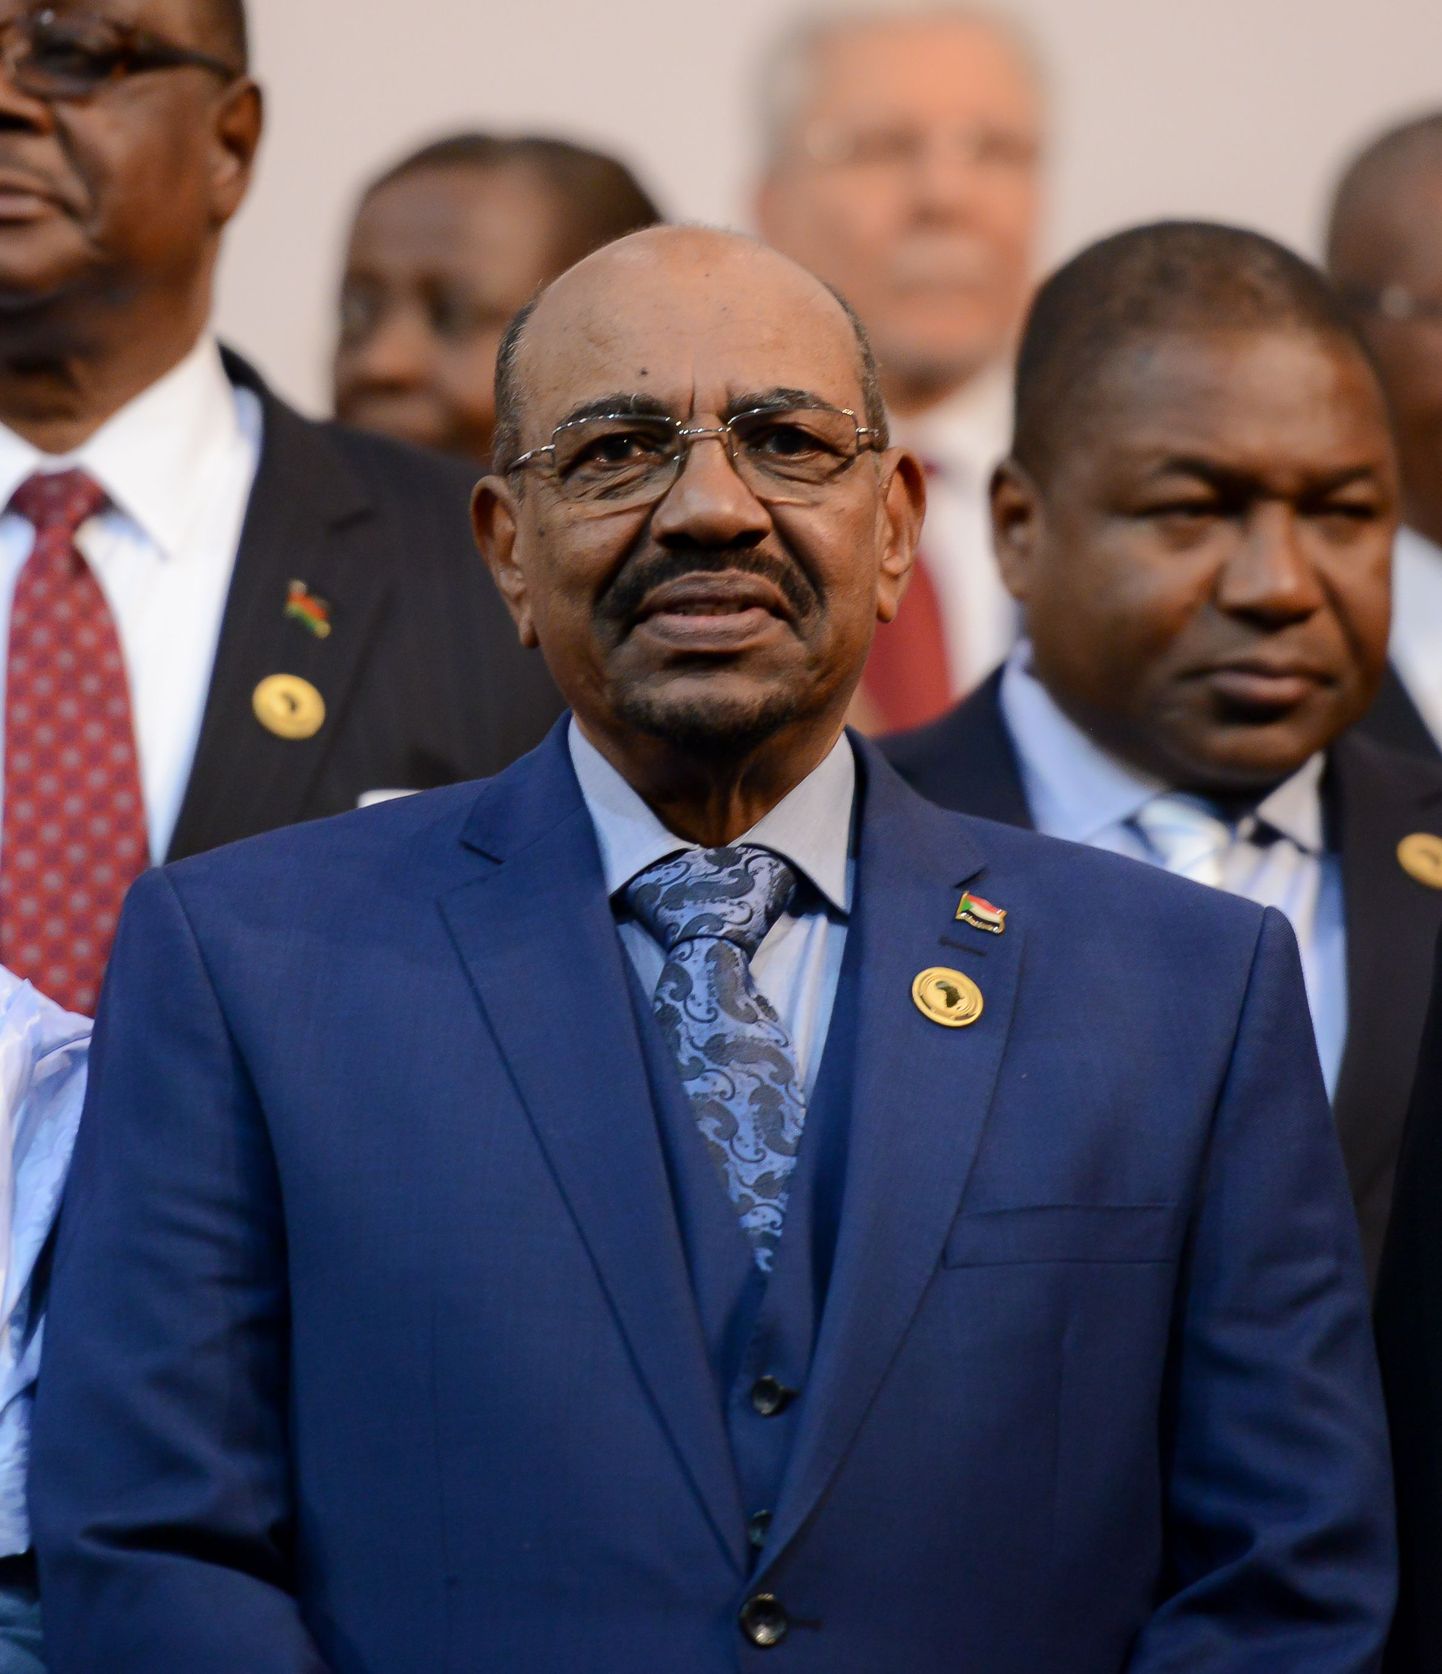 Sudaani president Omar Hassan al-Bashir